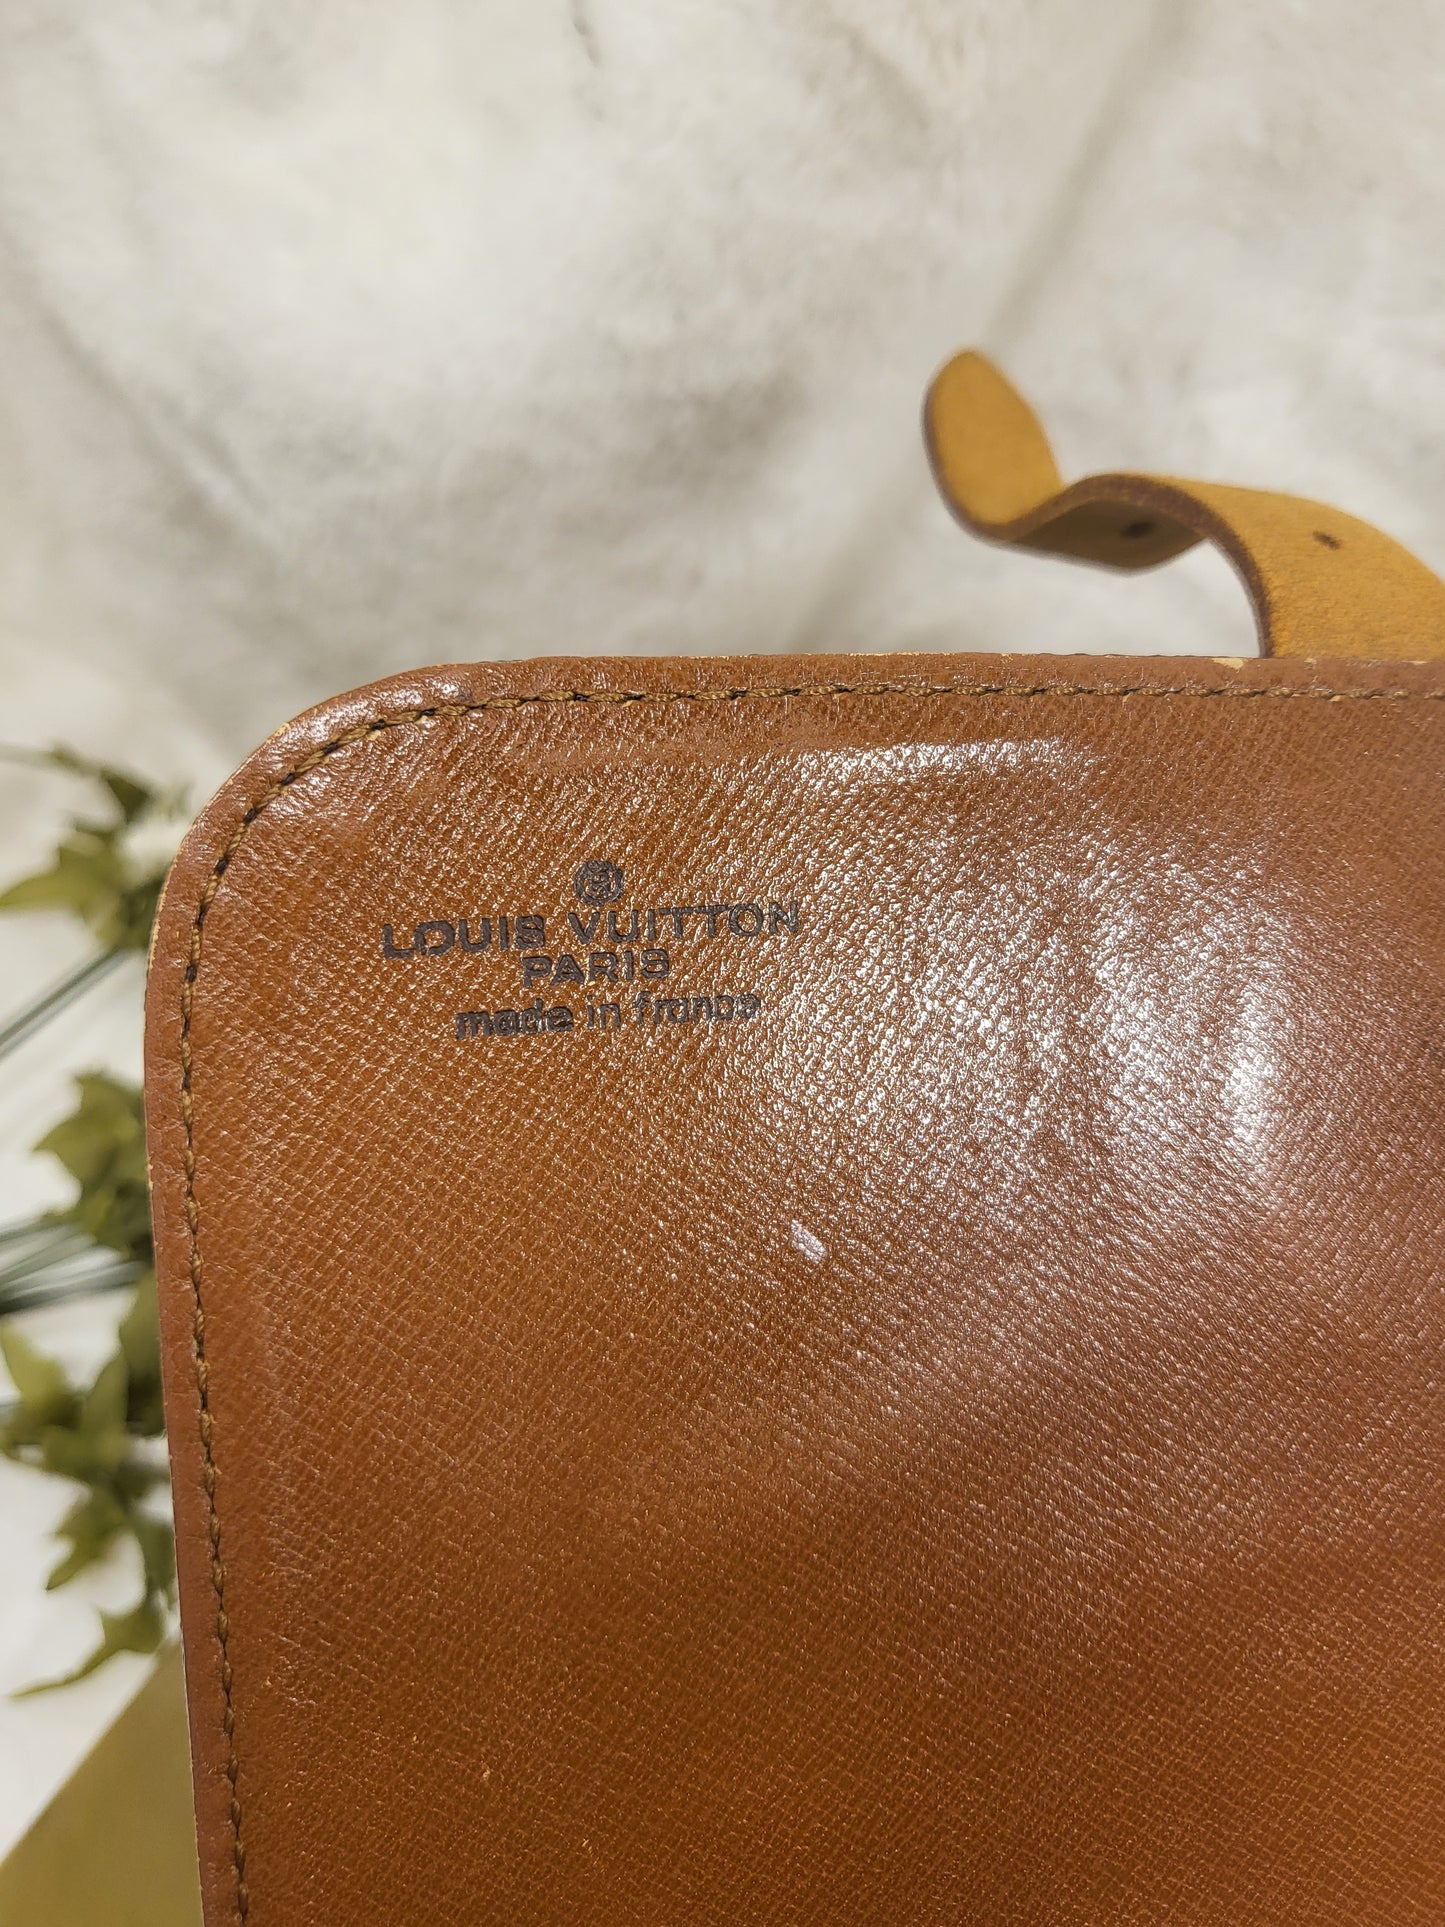 Authentic pre-owned Louis Vuitton Cartouchiere mm crossbody shoulder bag